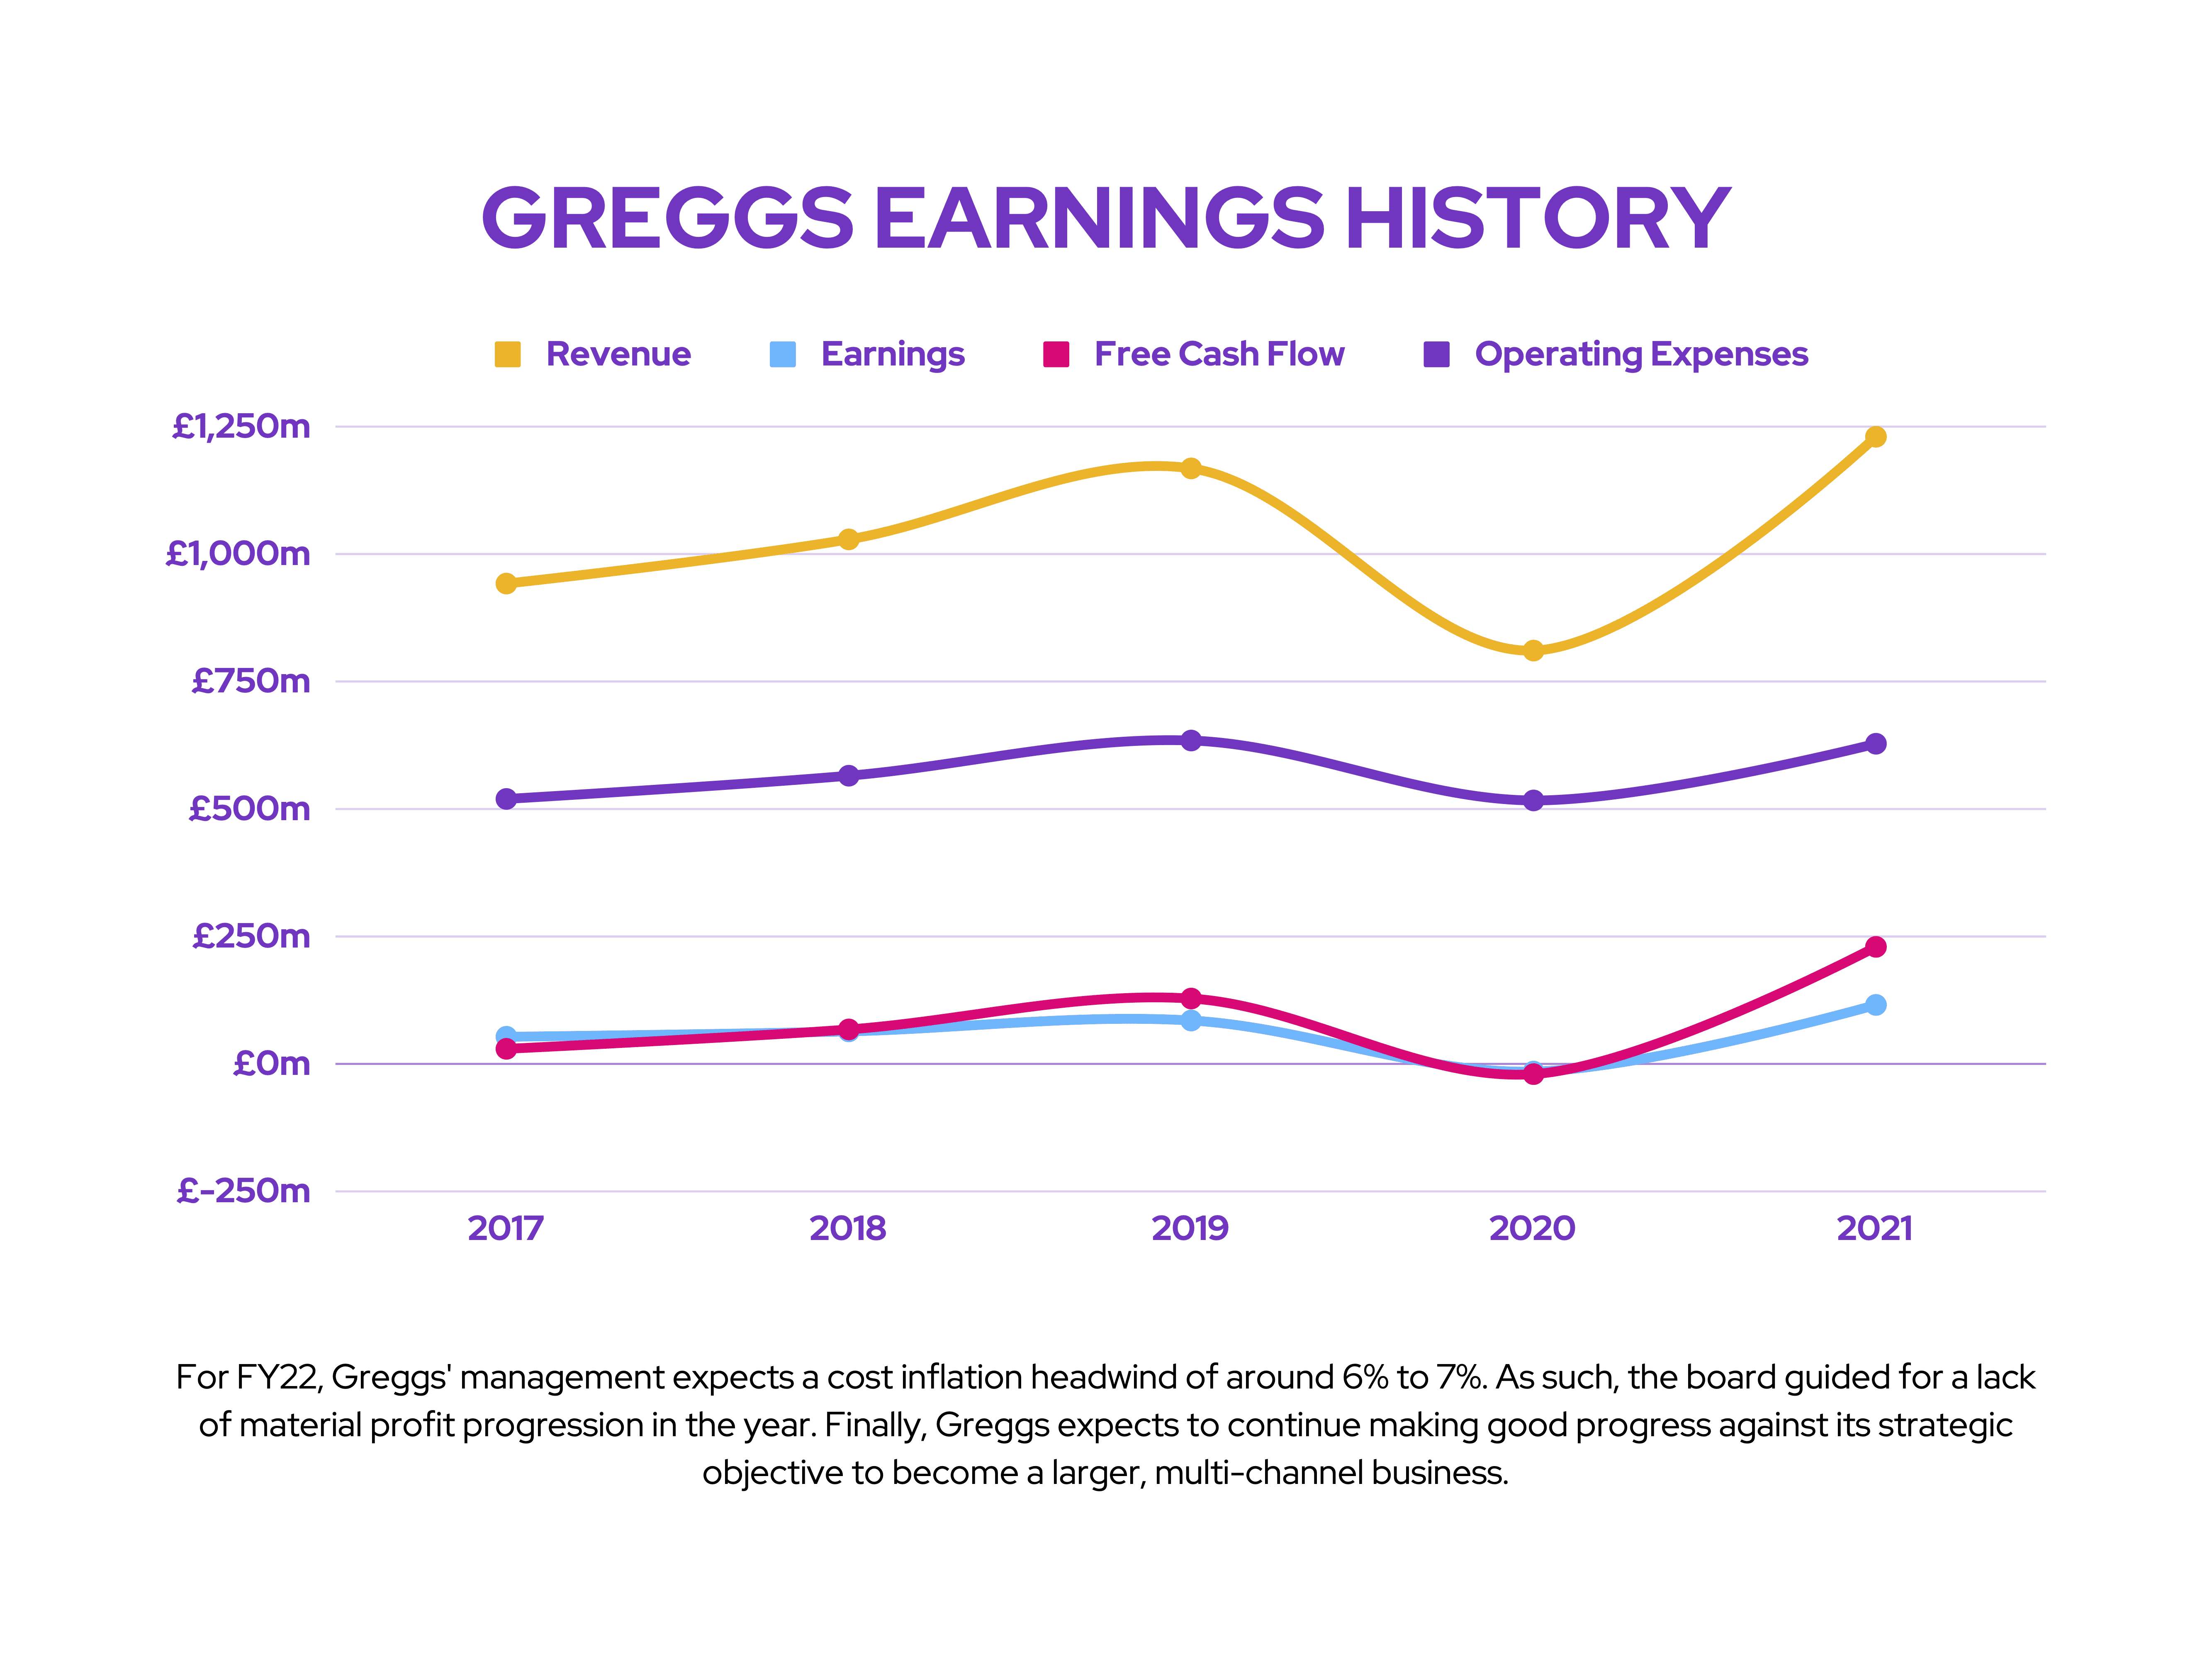 FTSE Earnings Preview: Greggs Earnings History